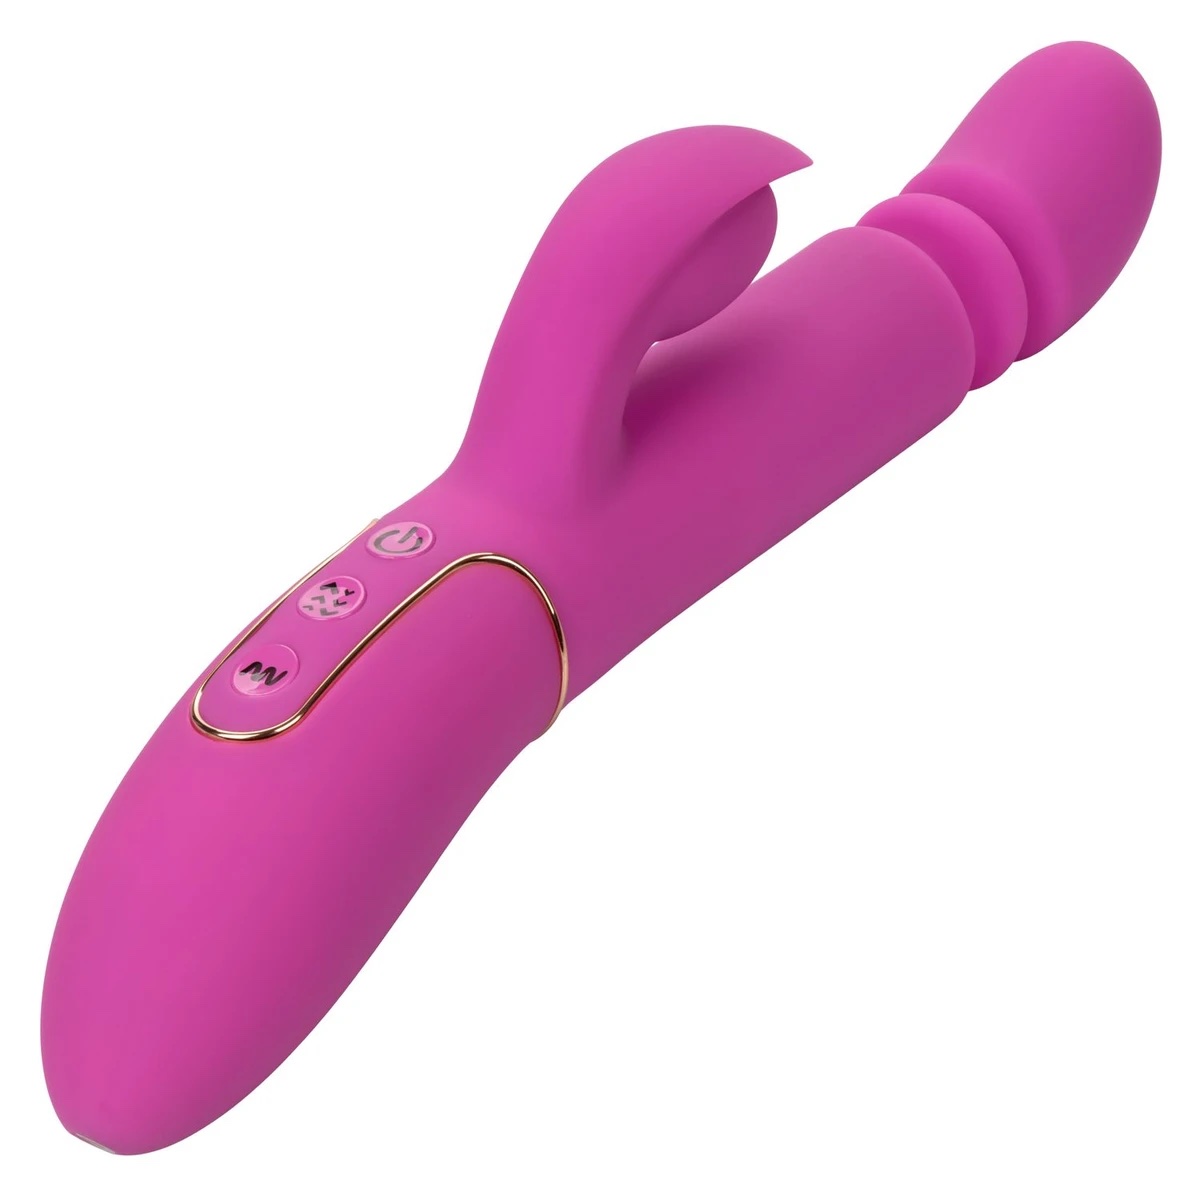 Joy fucking with avid sex toy